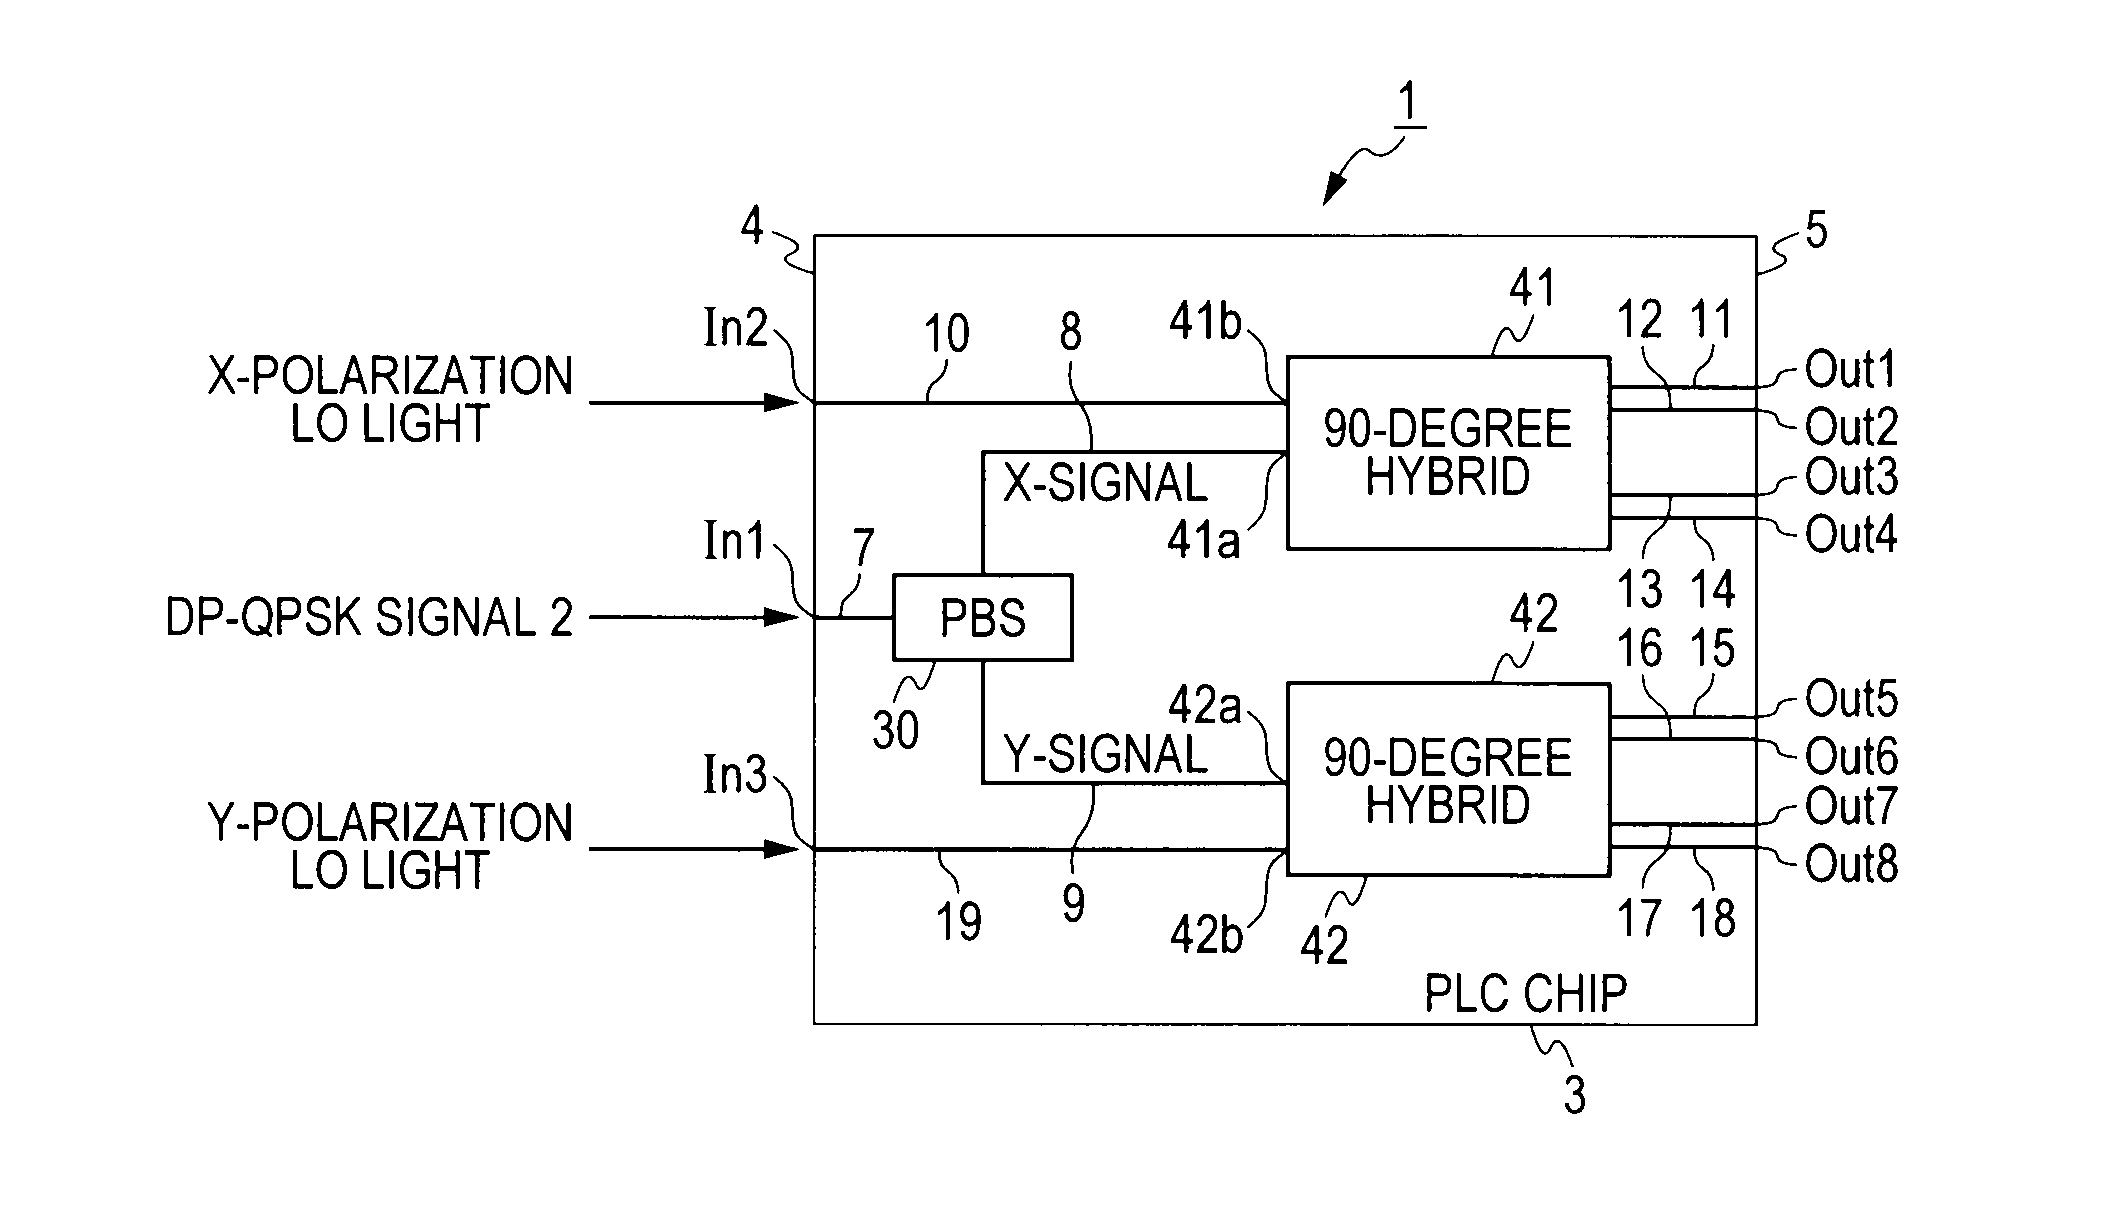 Plc-type demodulator and optical transmission system